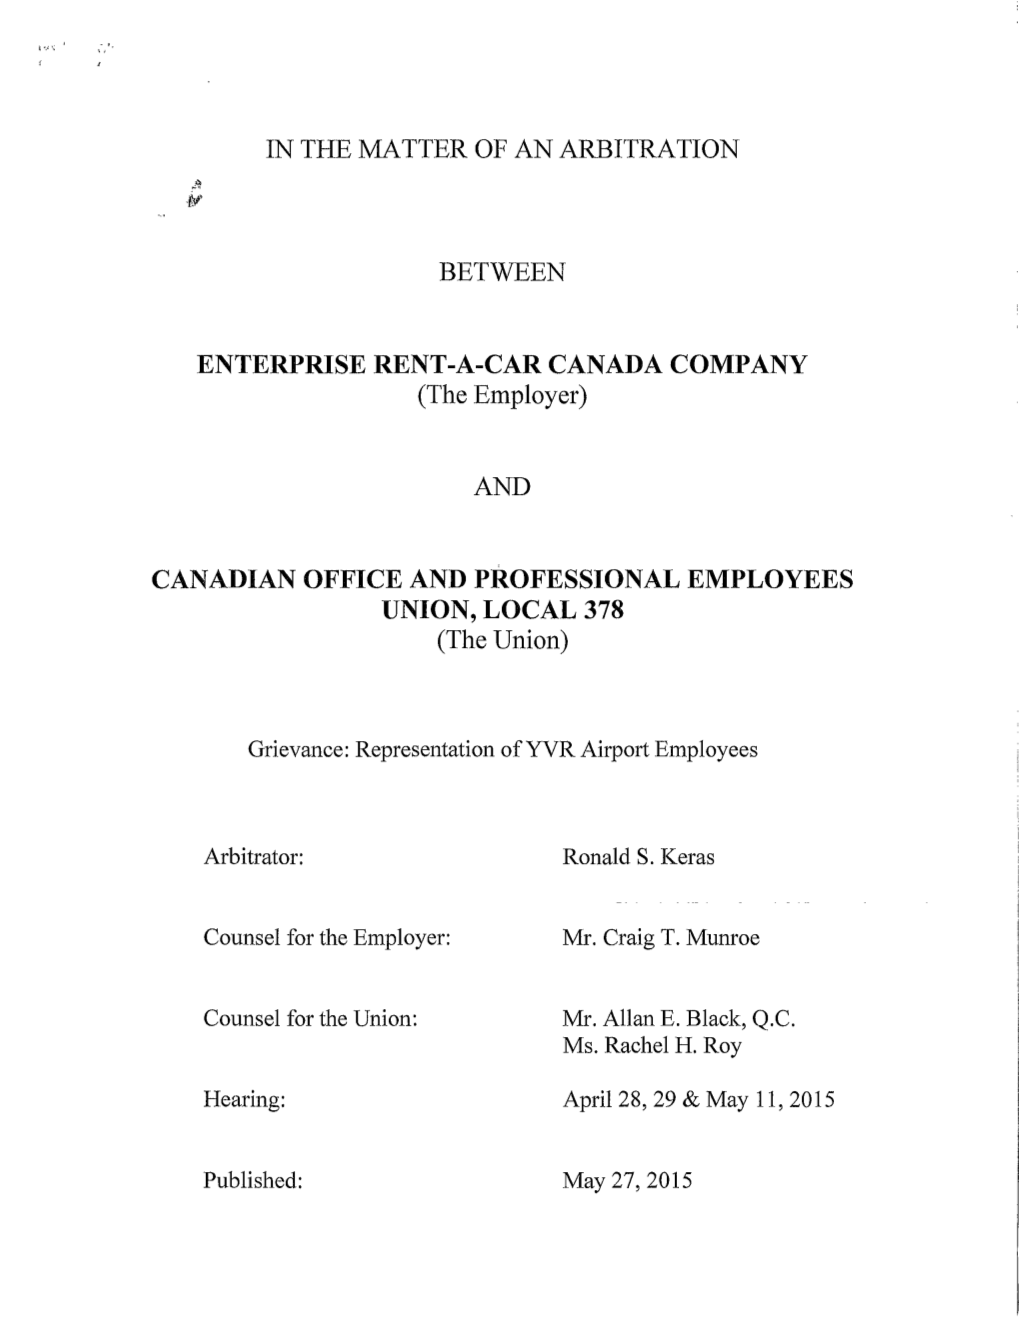 Enterprise Rent-A-Car Canada Company And